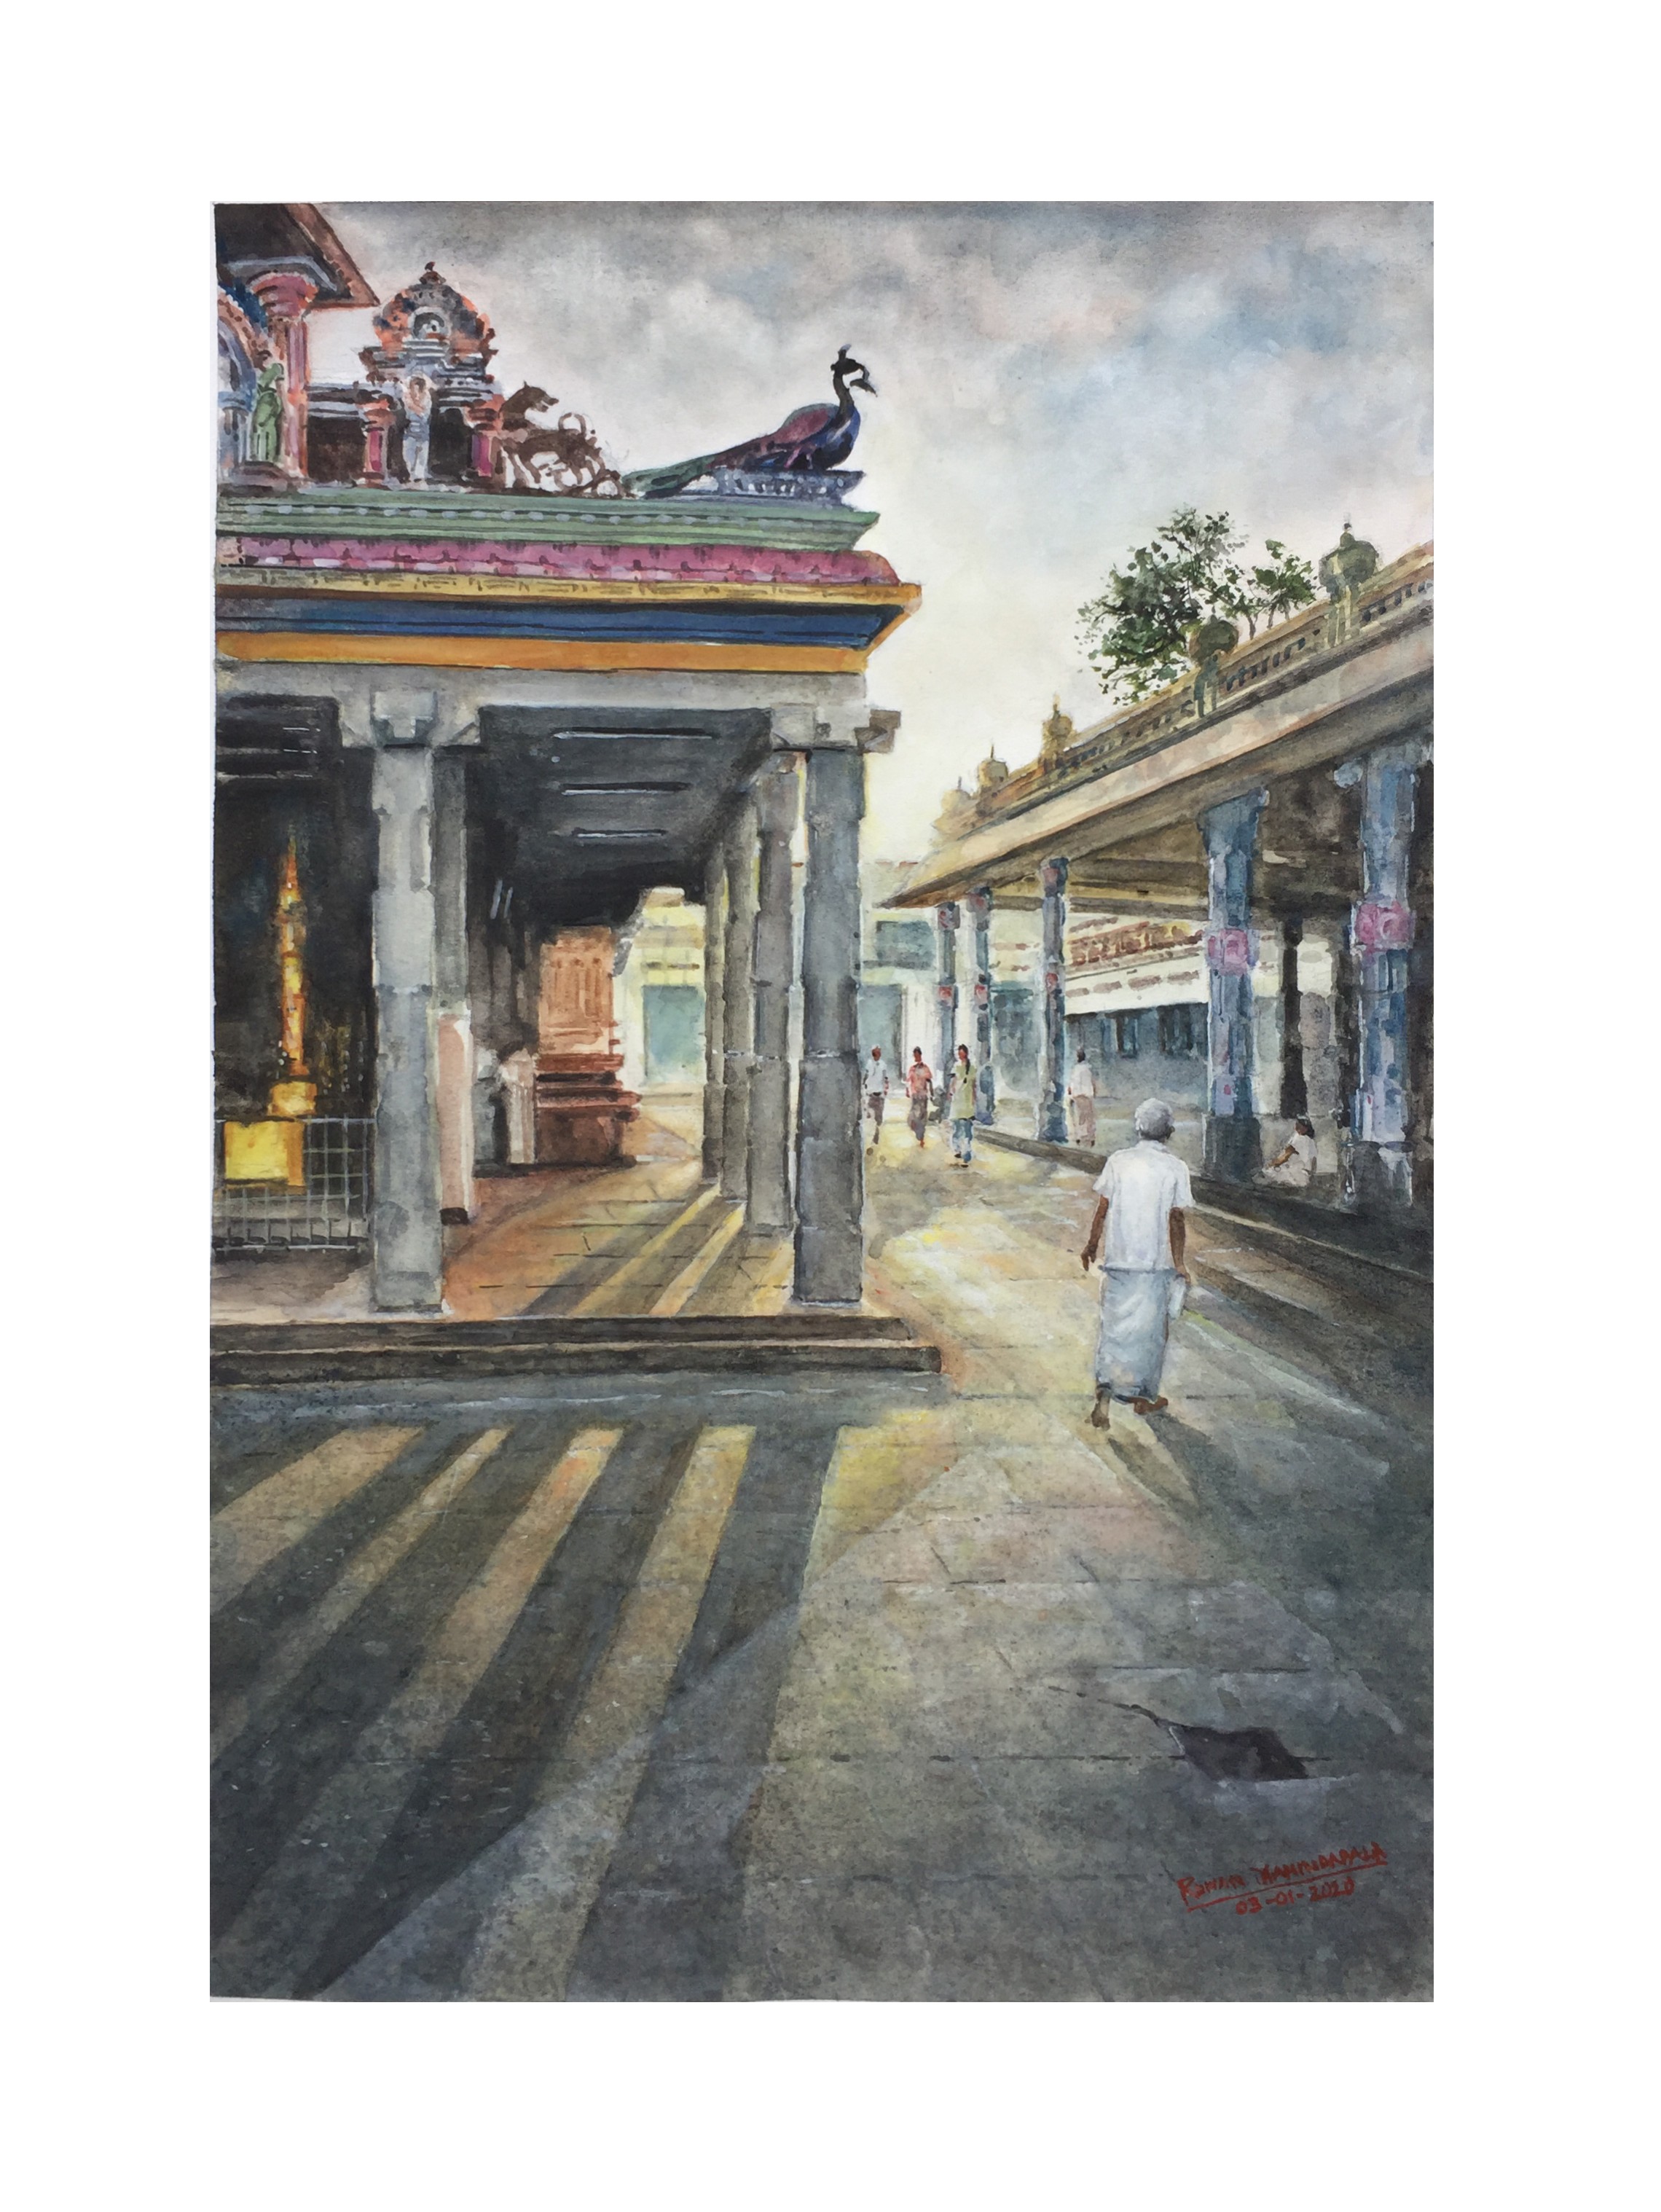 Hindu Temple in Colombo by RUWAN MAHINDAPALA